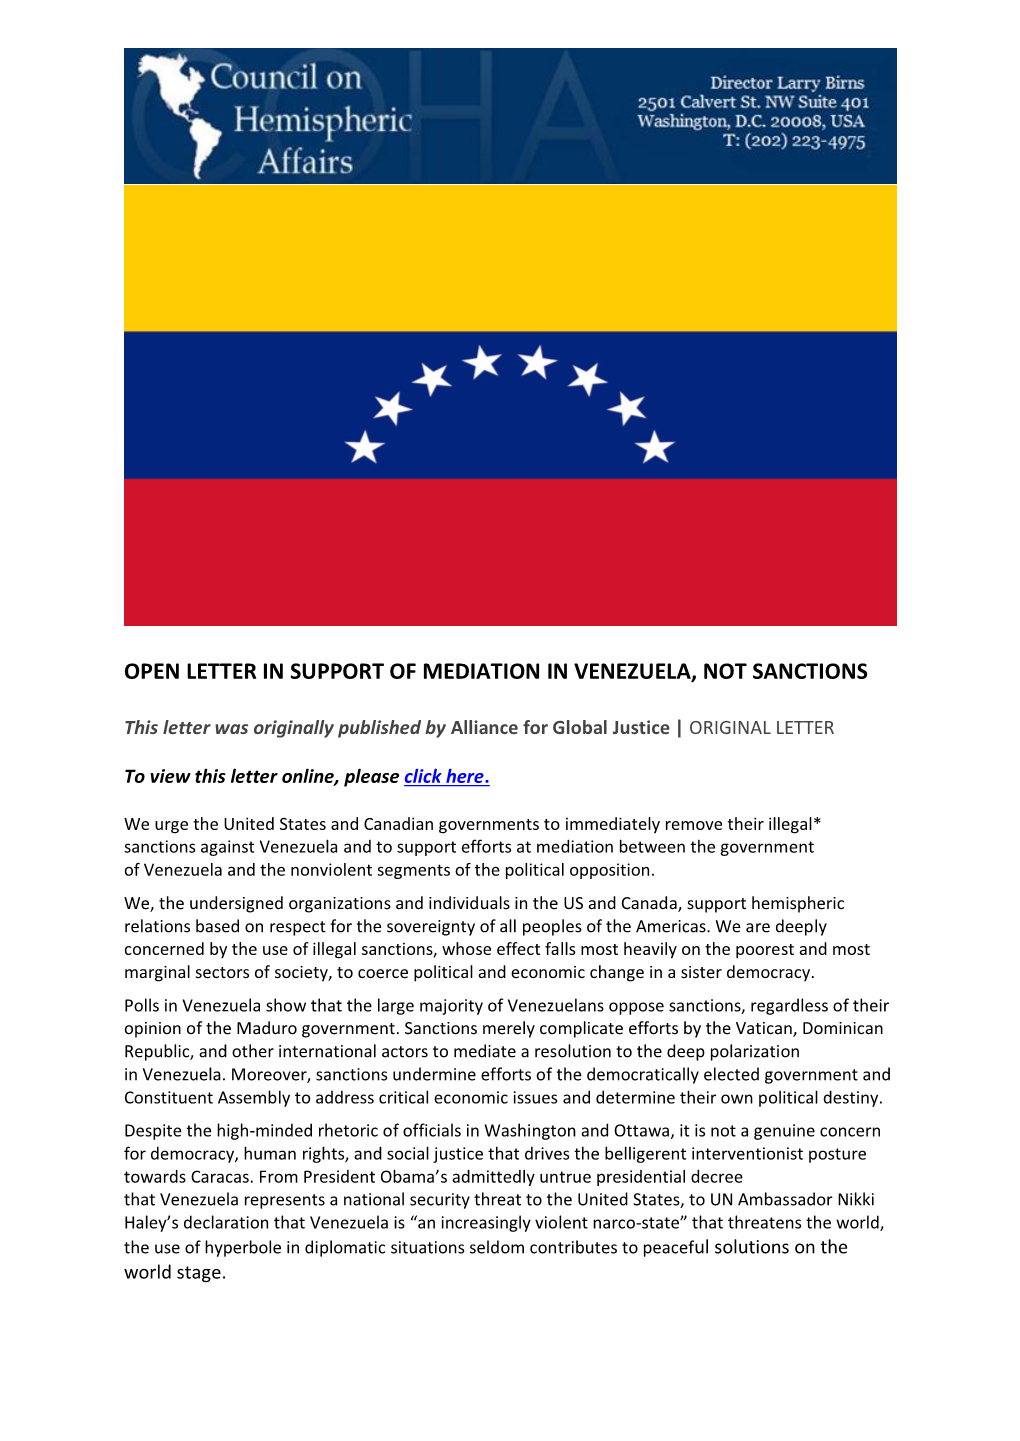 Open Letter in Support of Mediation in Venezuela, Not Sanctions